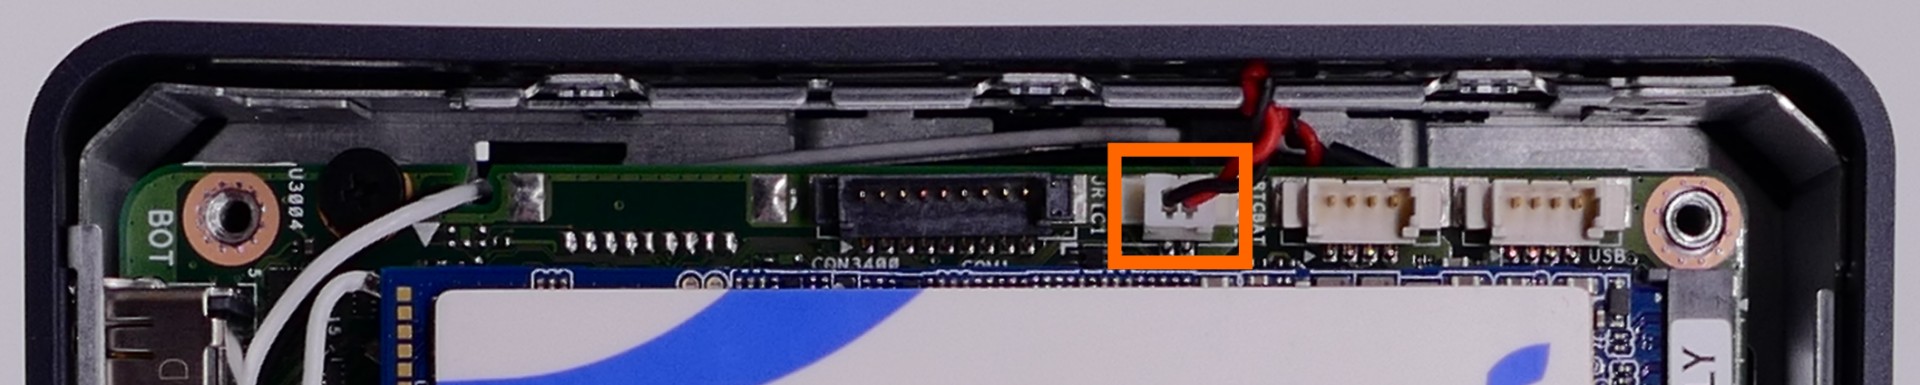 CMOS battery connector